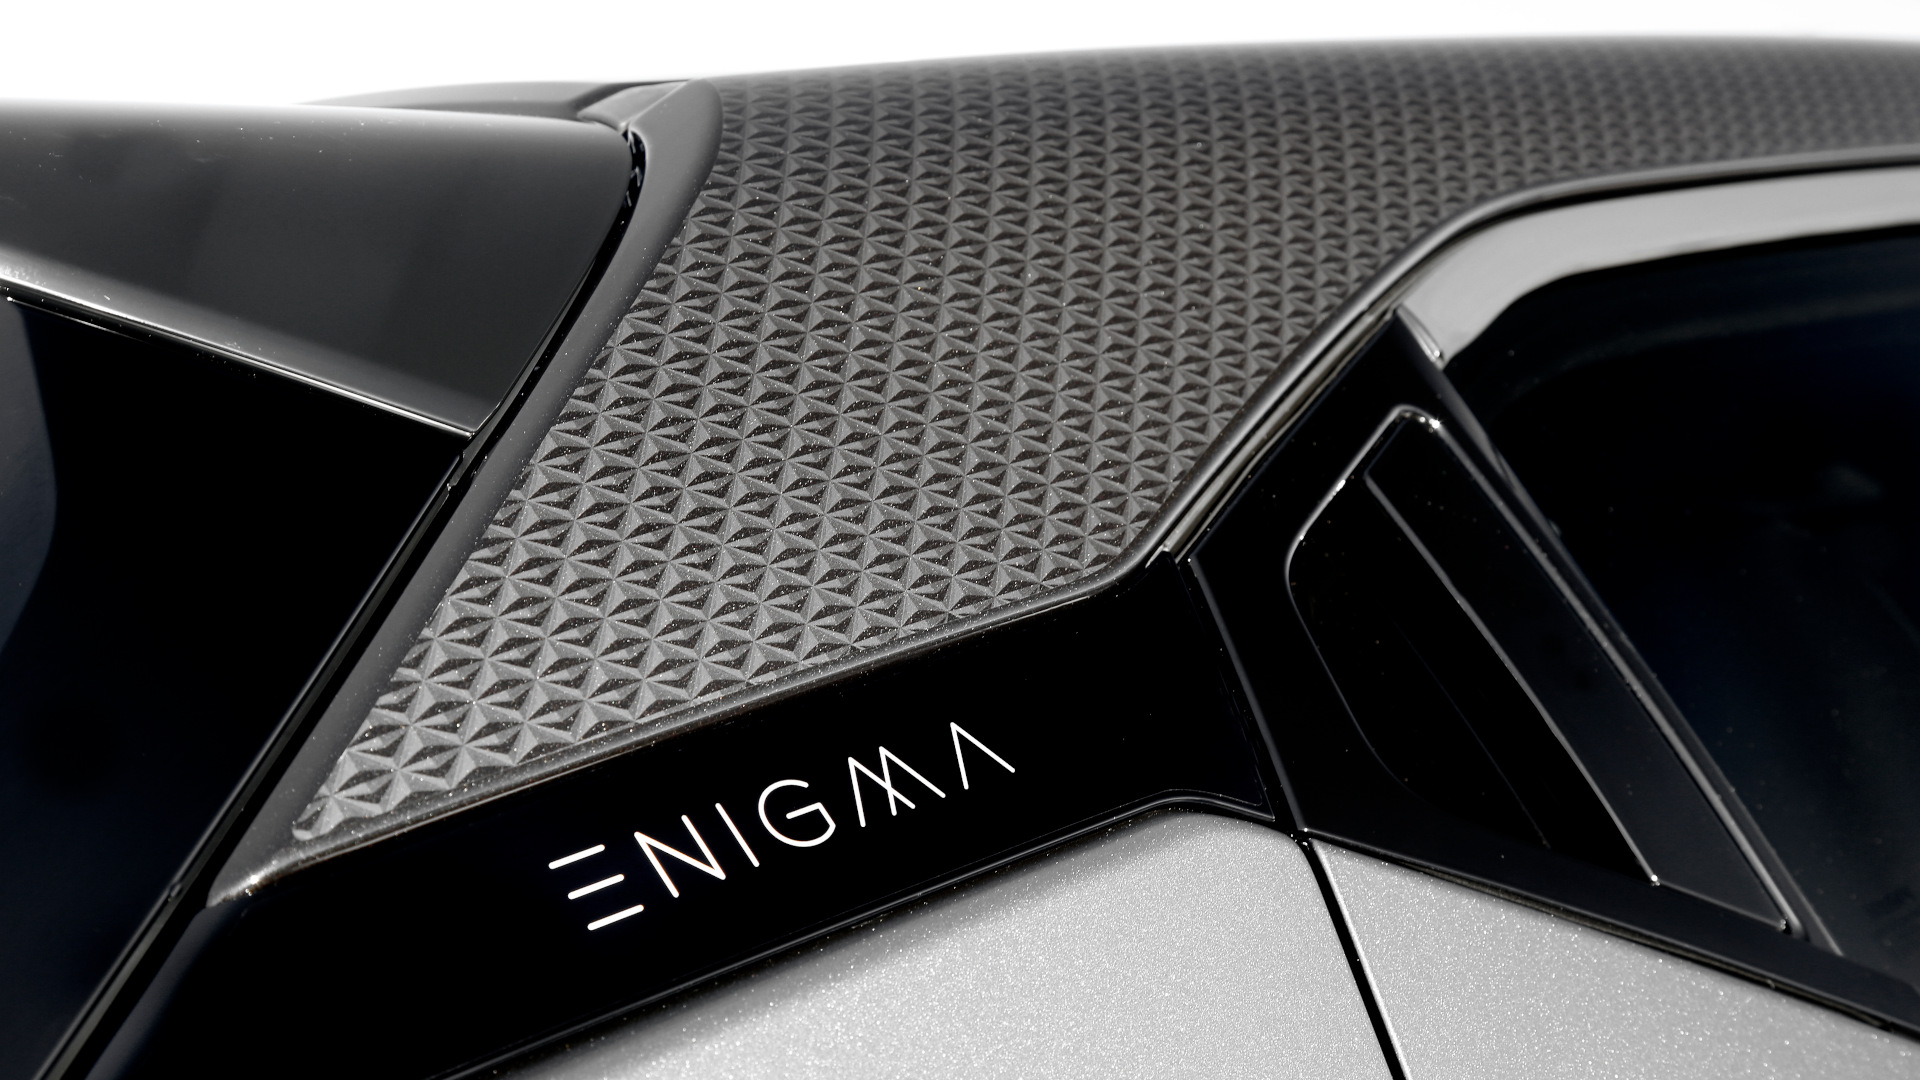 Nissan Juke Enigma - The Enigma Brand